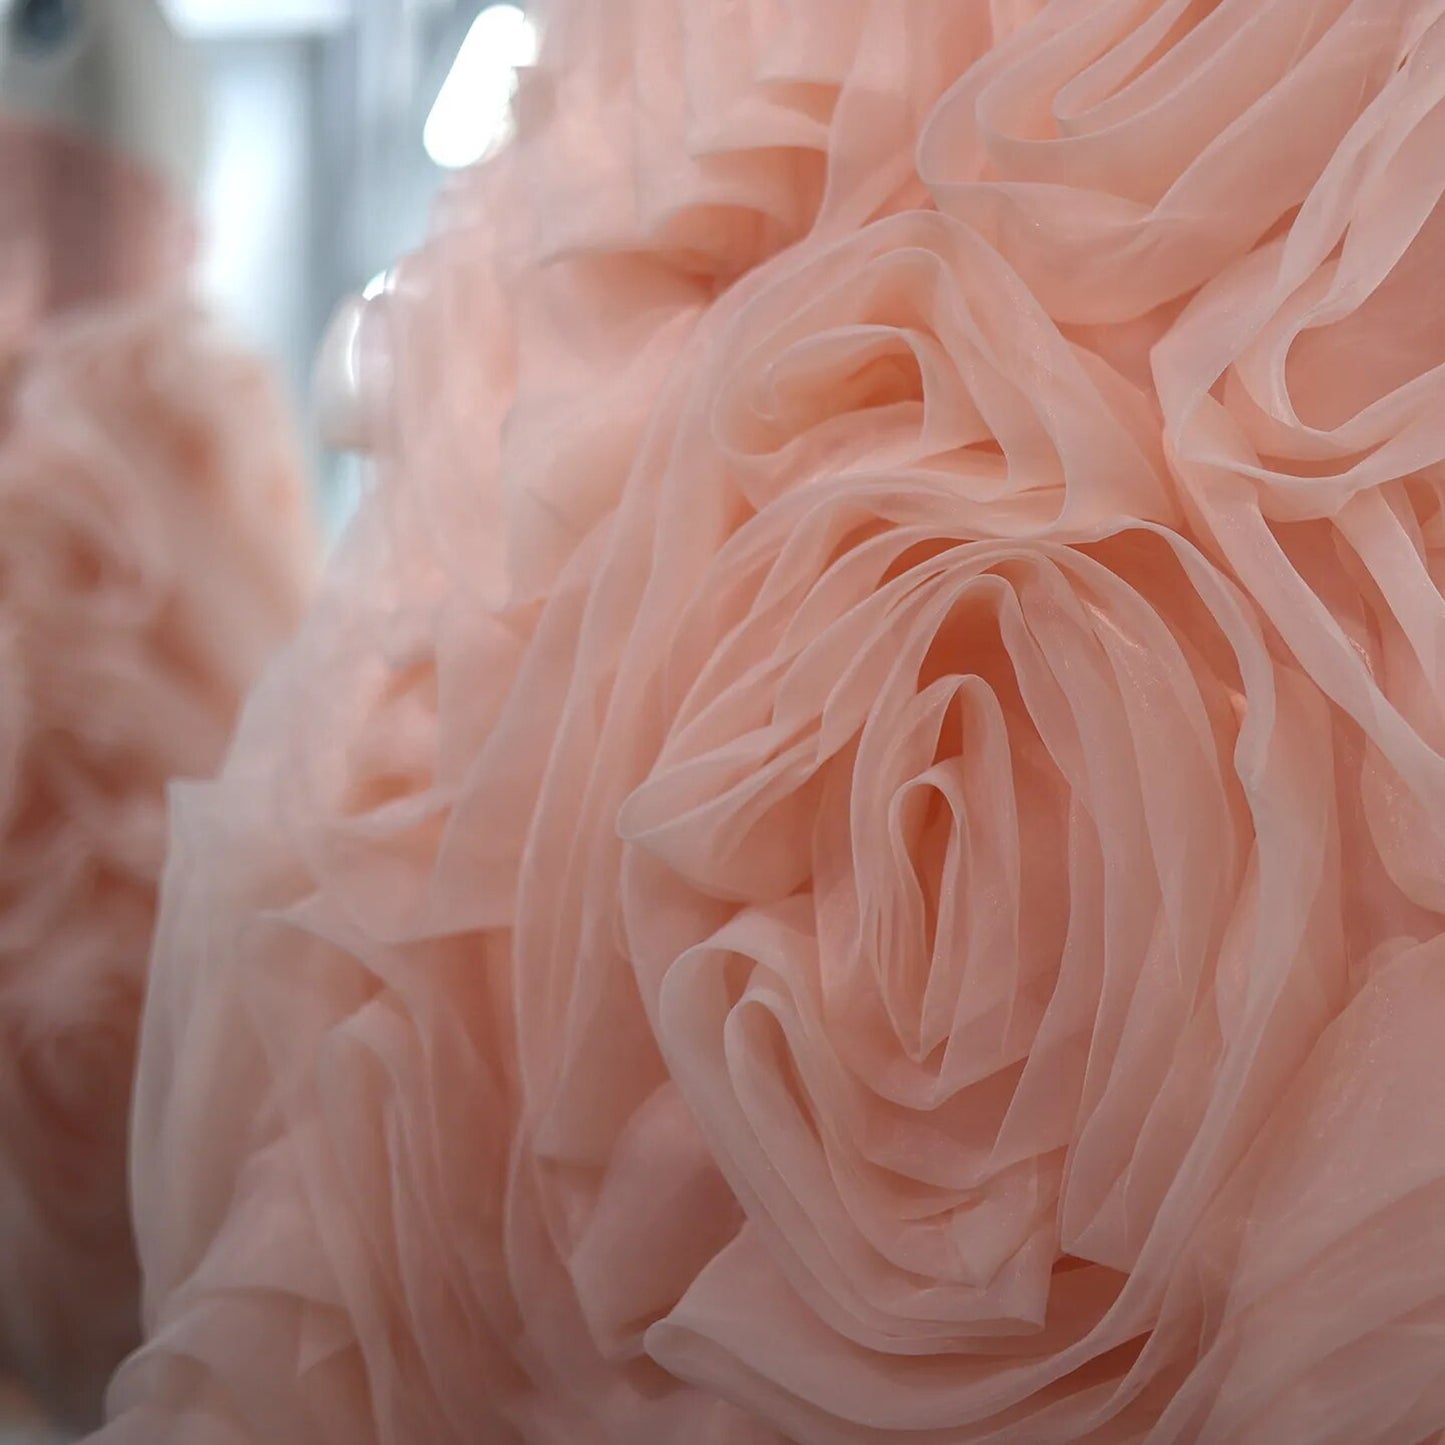 Strapless Rose Ruffle Tulle Midi Dress